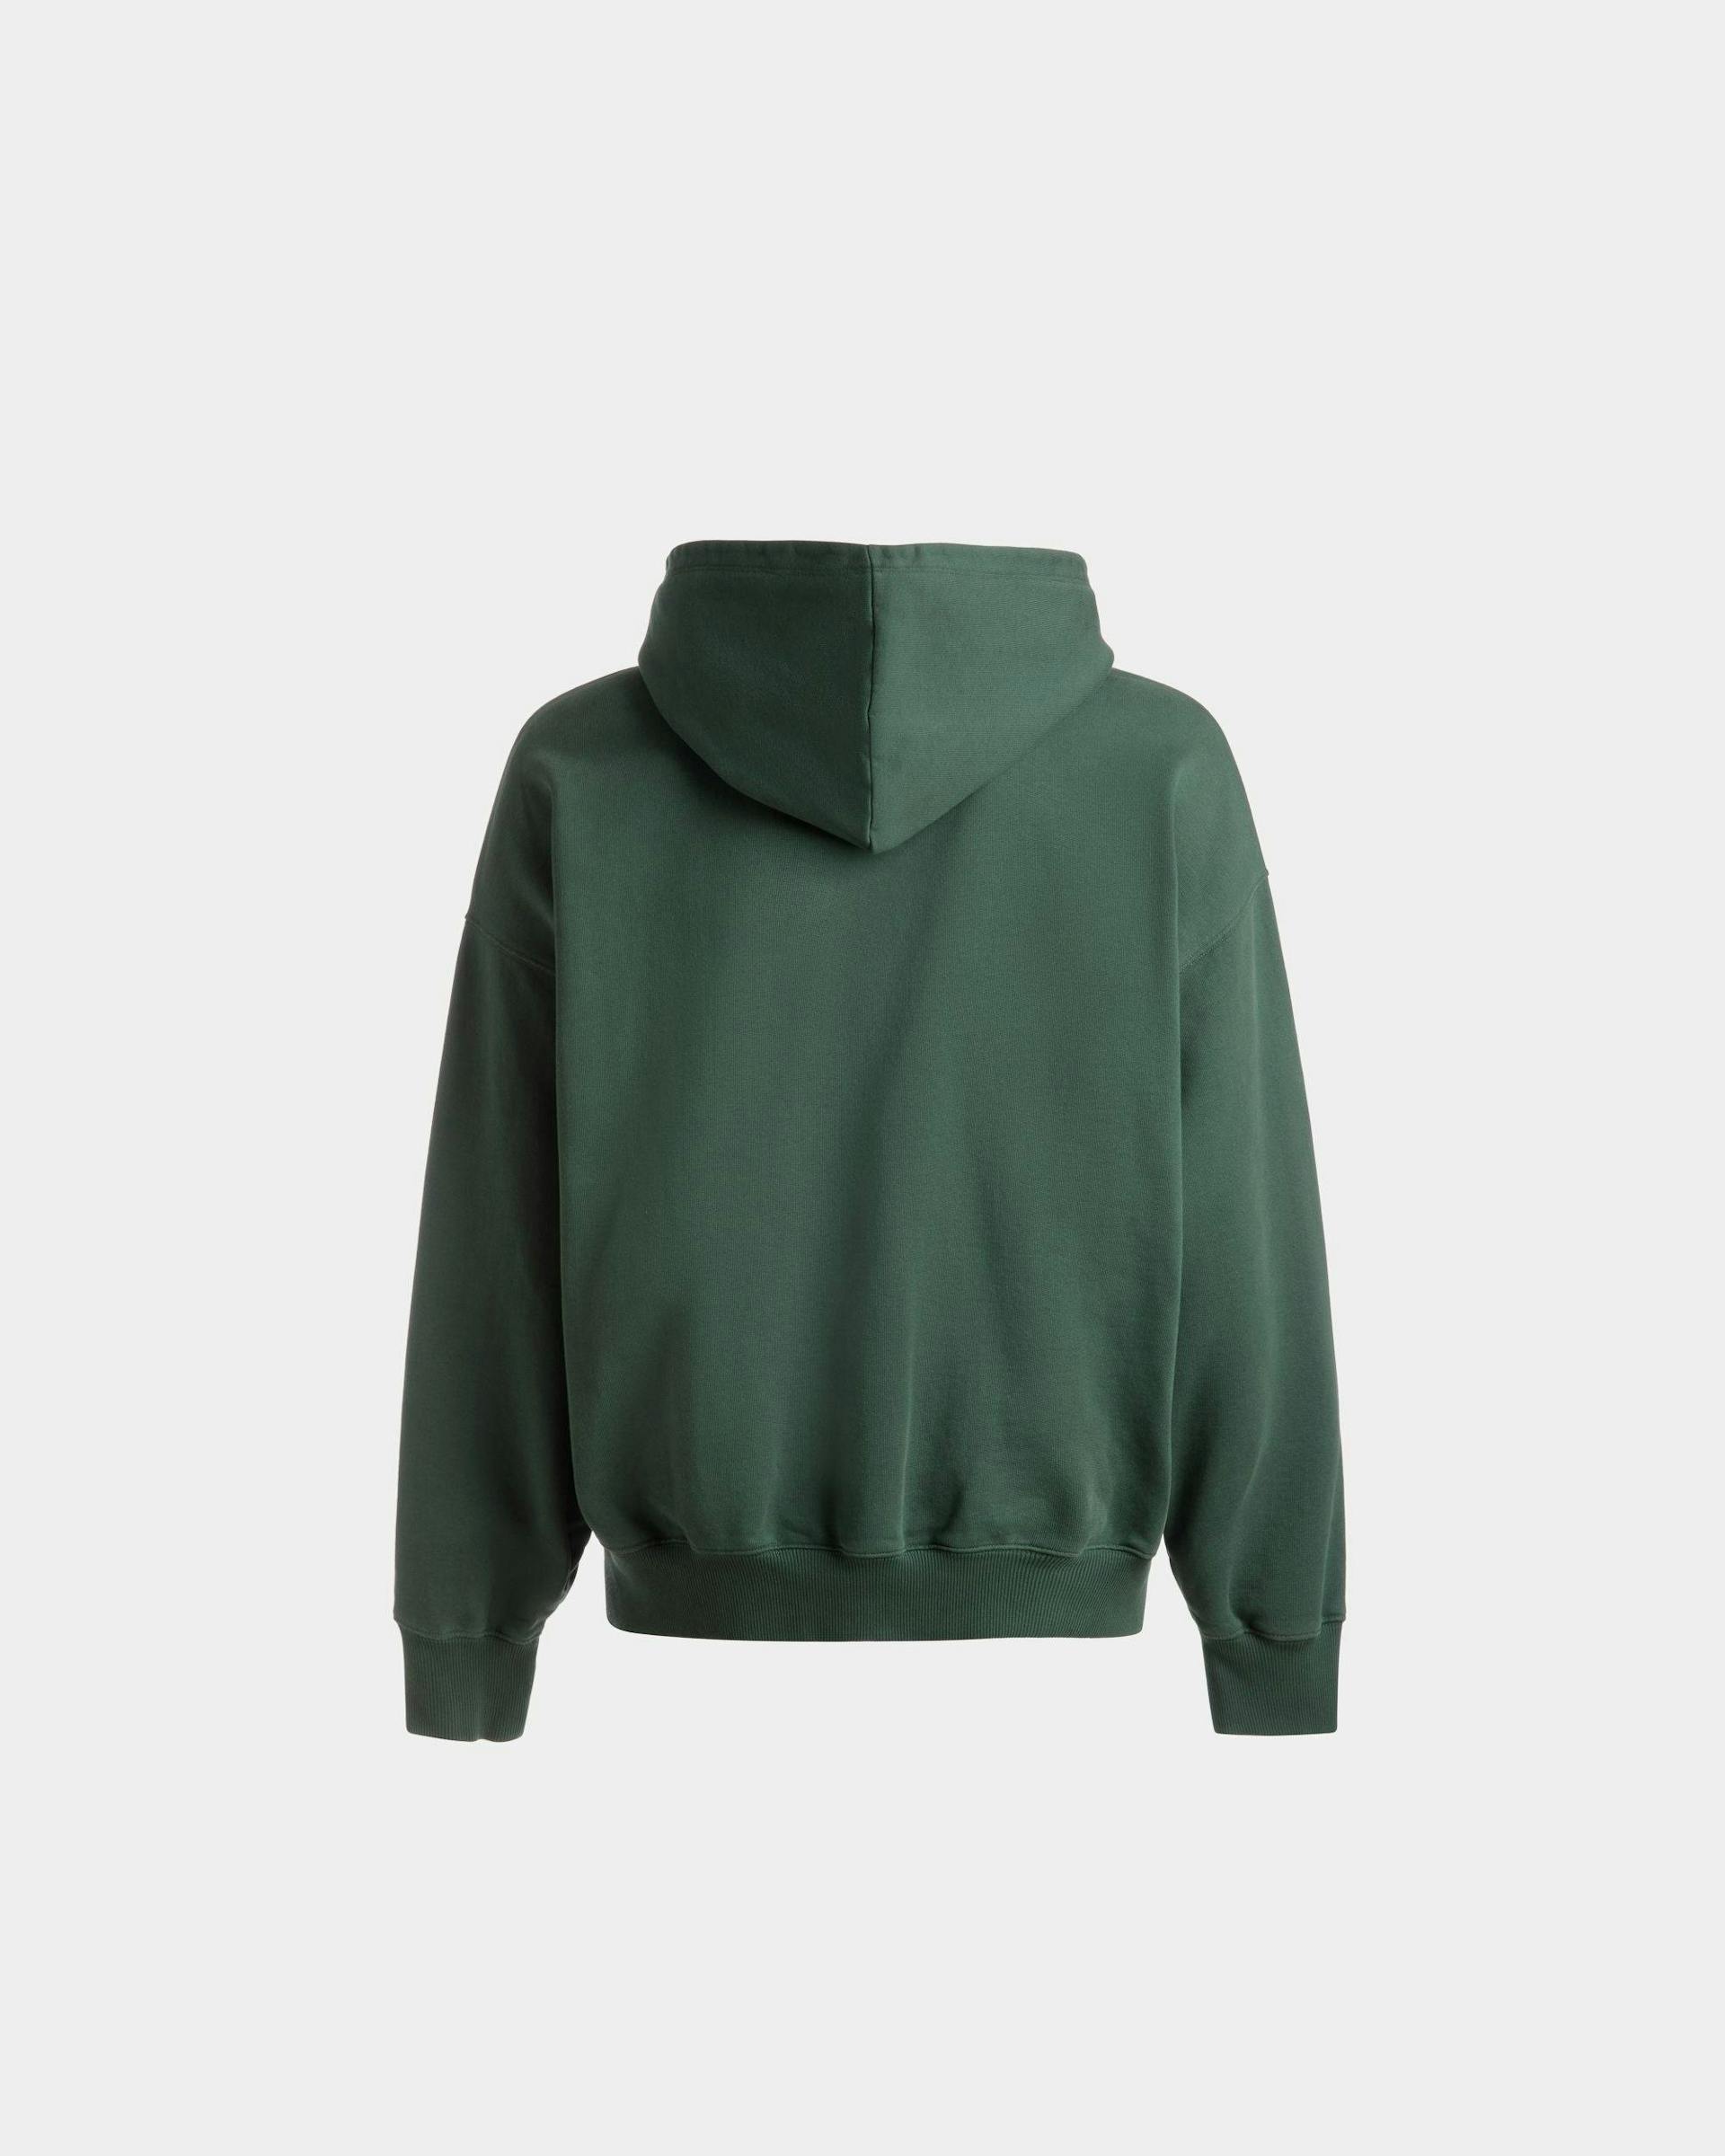 Men's Foiled Hooded Sweatshirt In Kelly Green Cotton | Bally | Still Life Back